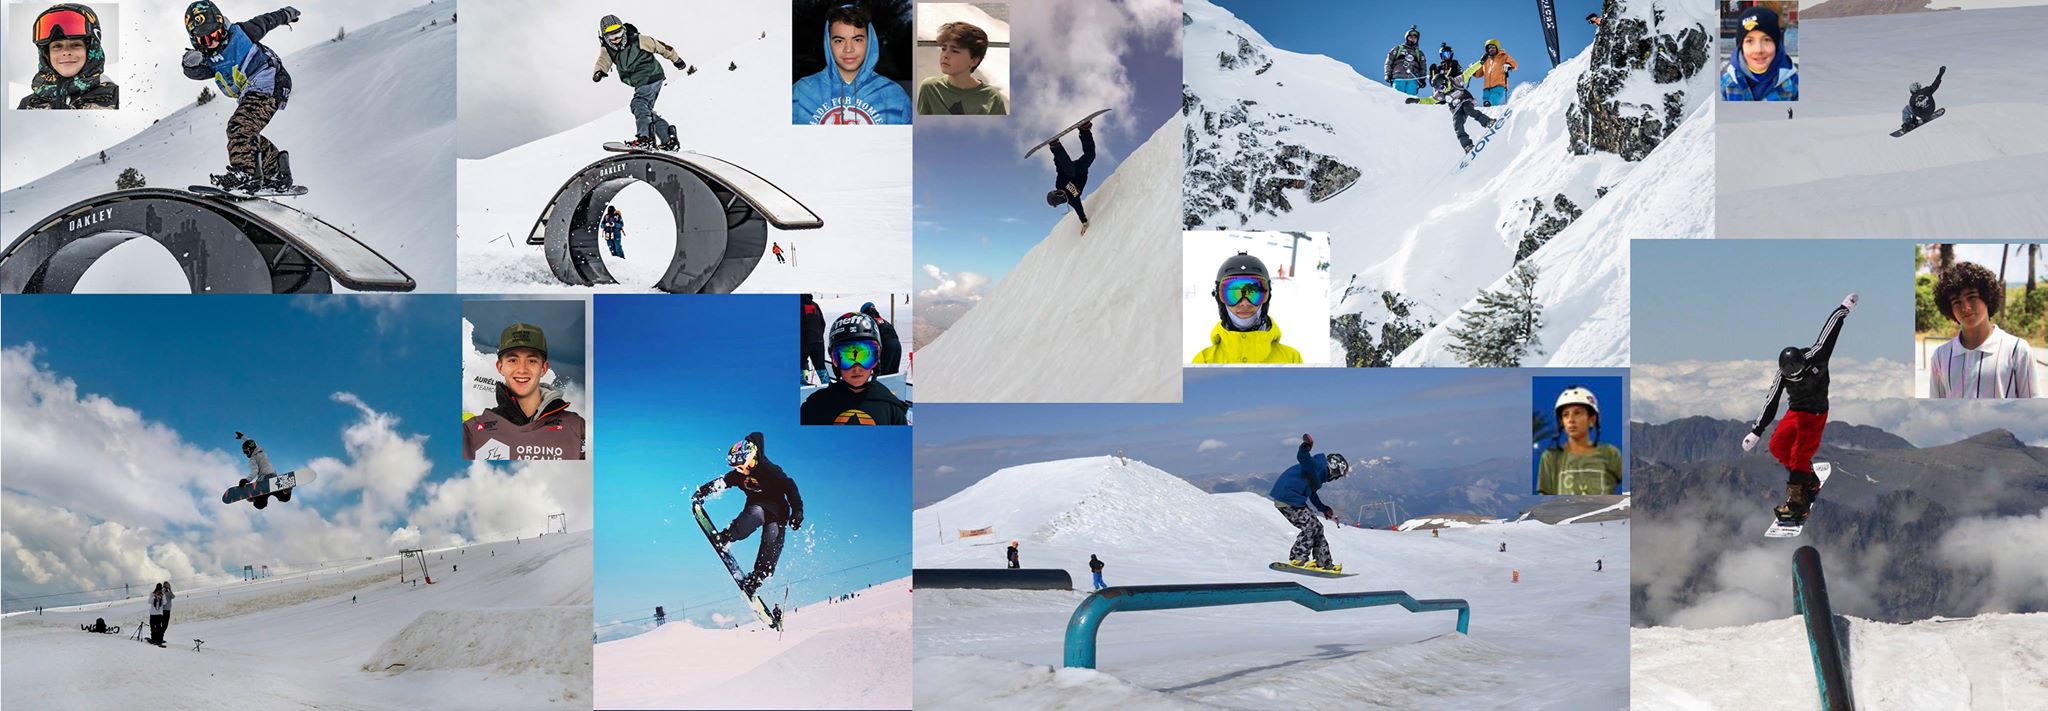 Primera quedada de Jóvenes promesas del snowboard Nacional en Boí Taüll